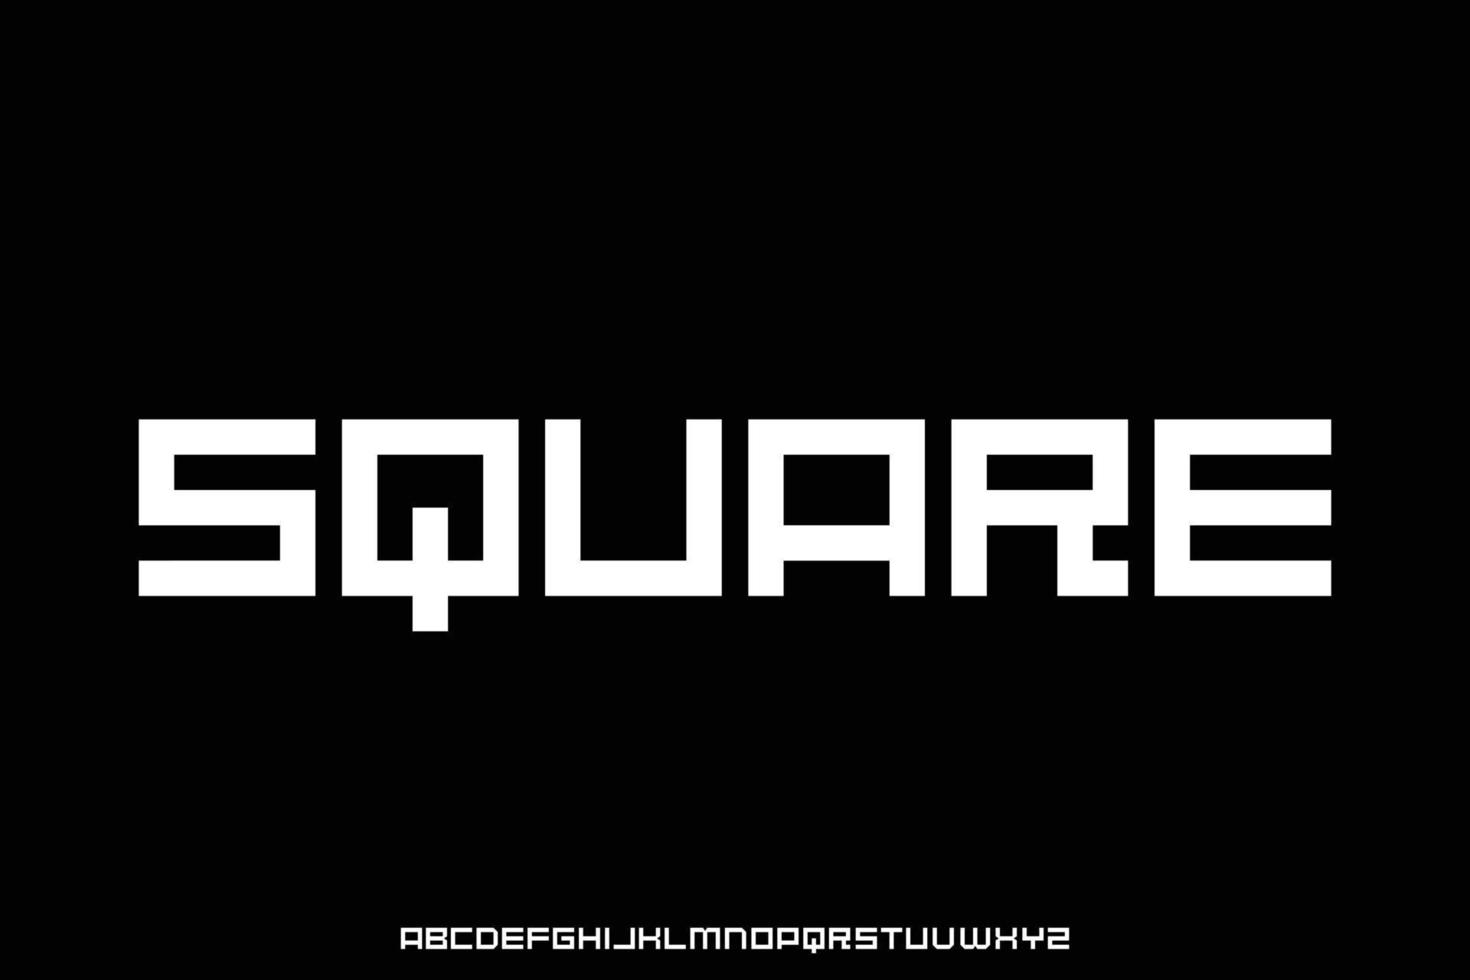 Modern square shape display font vector